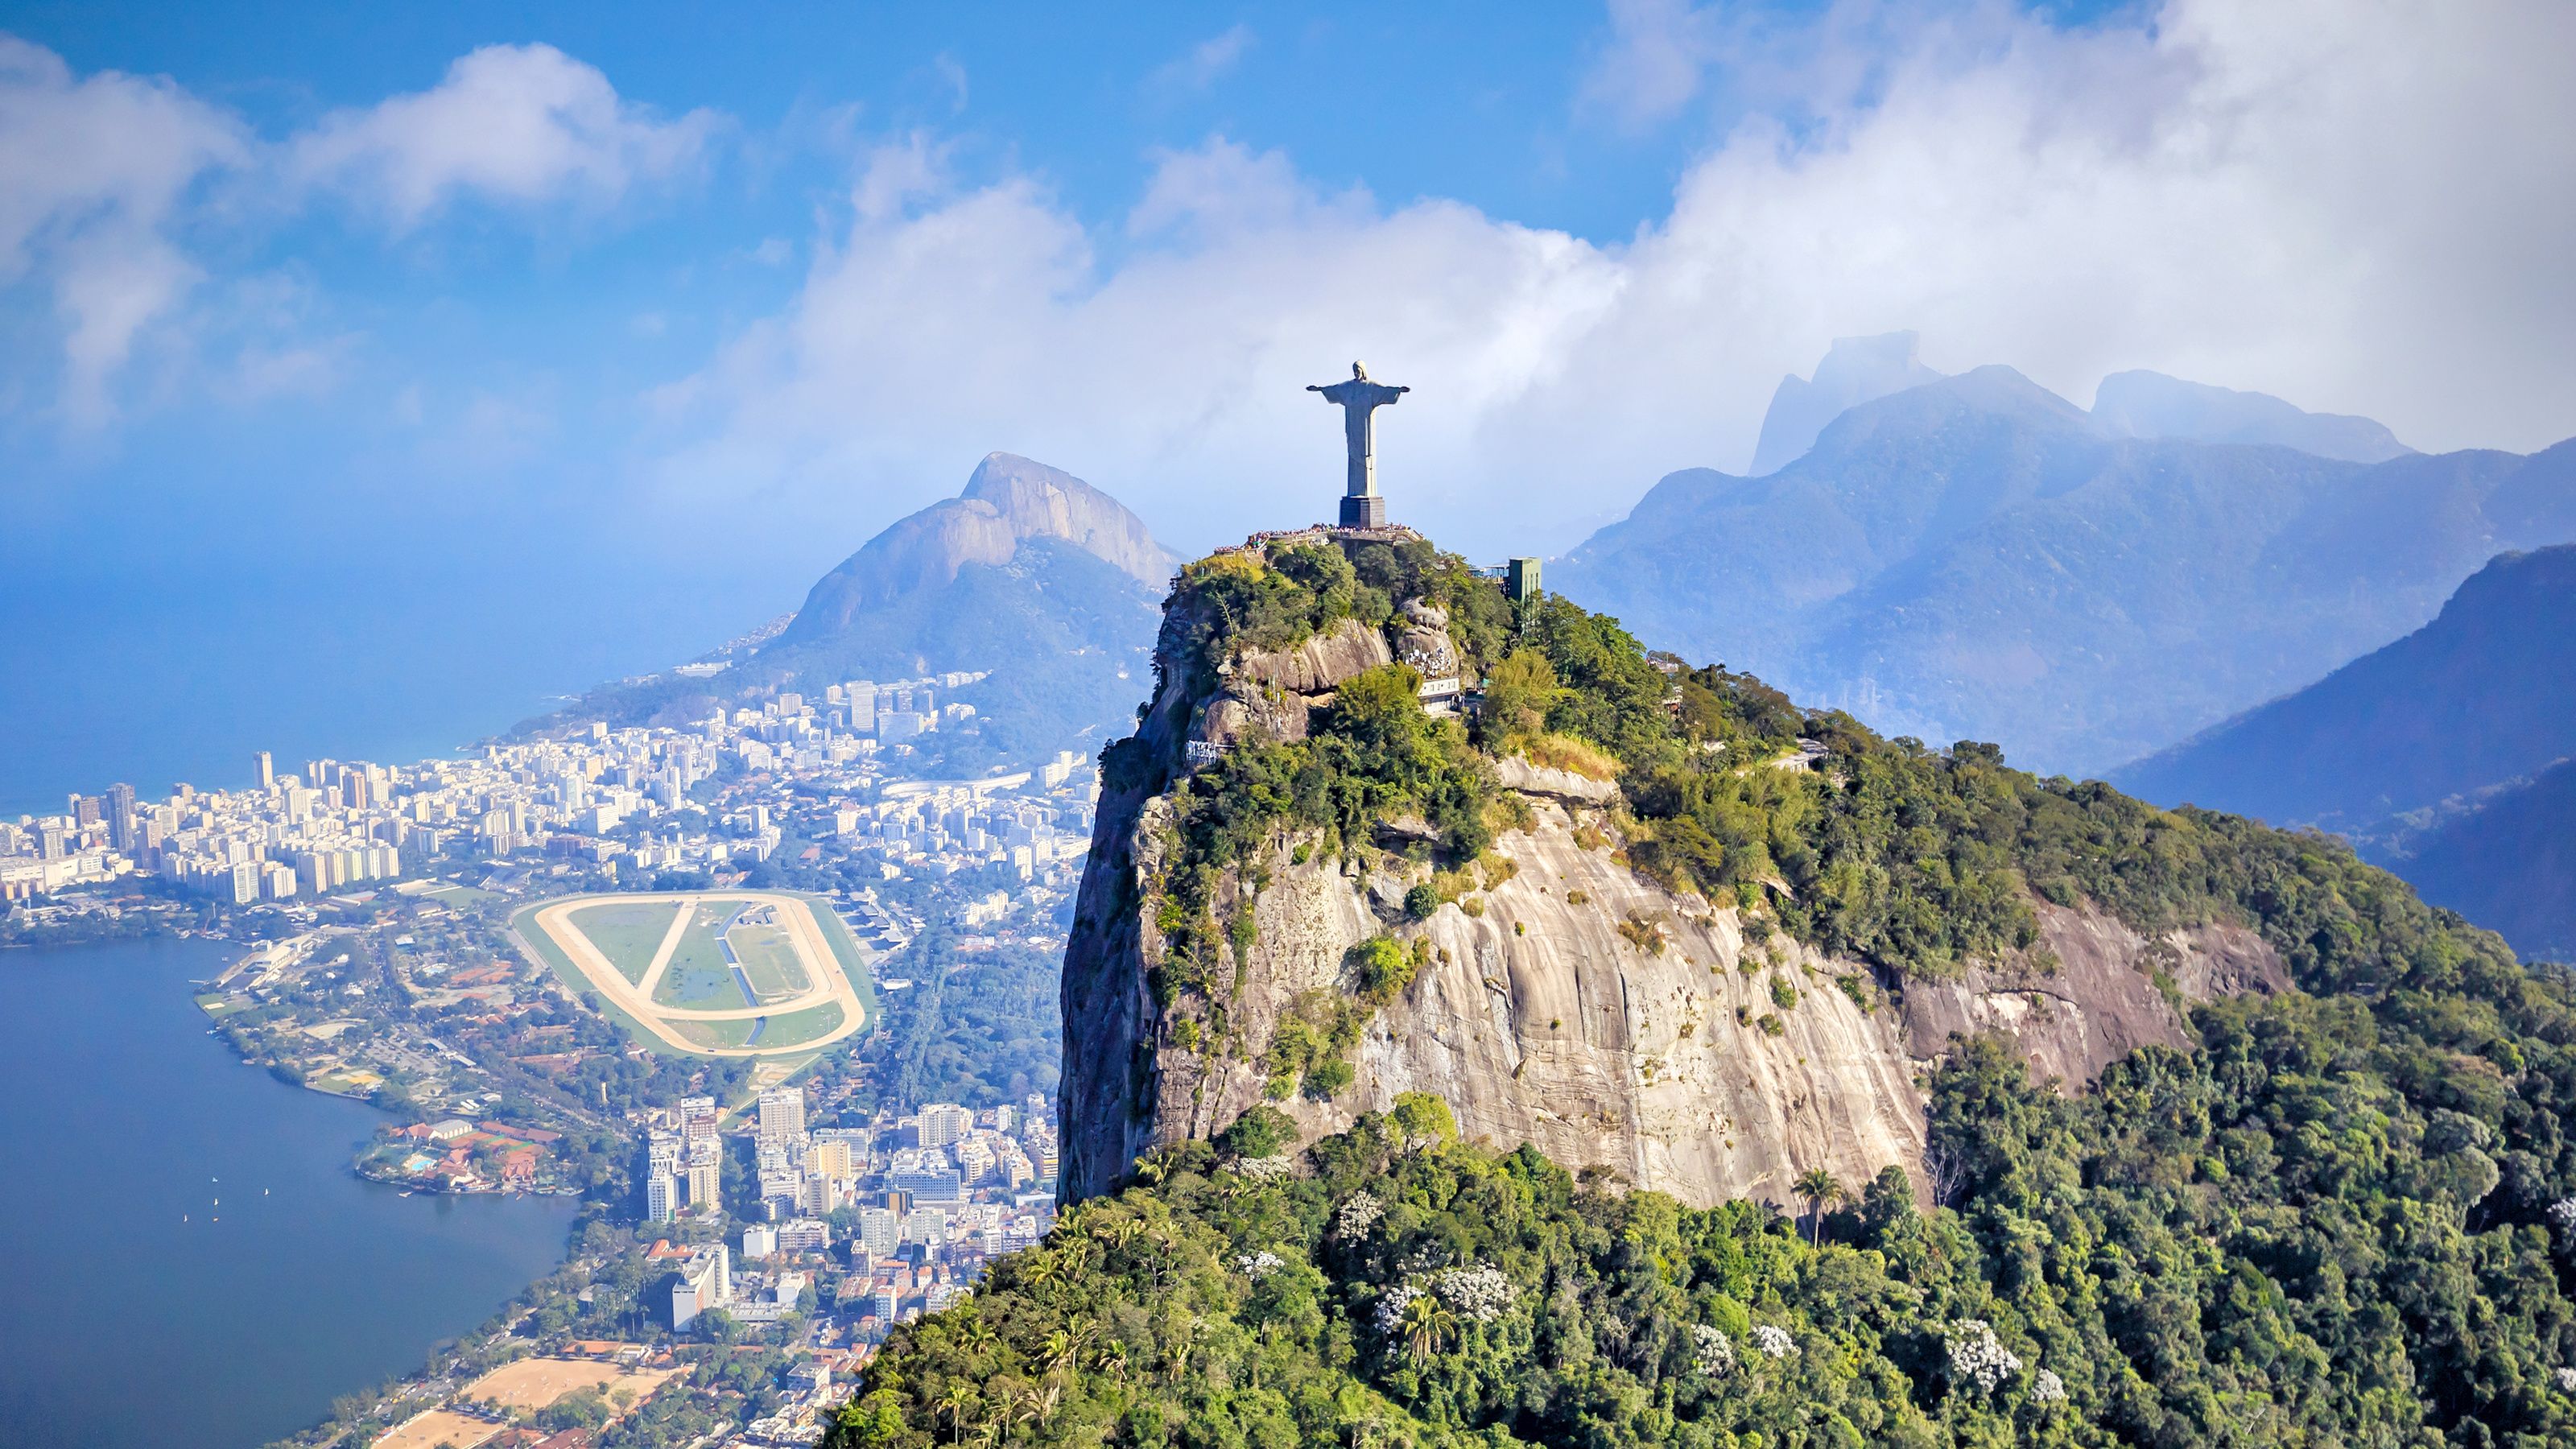 See Rio de Janeiro aboard Crystal Serenity in 2025